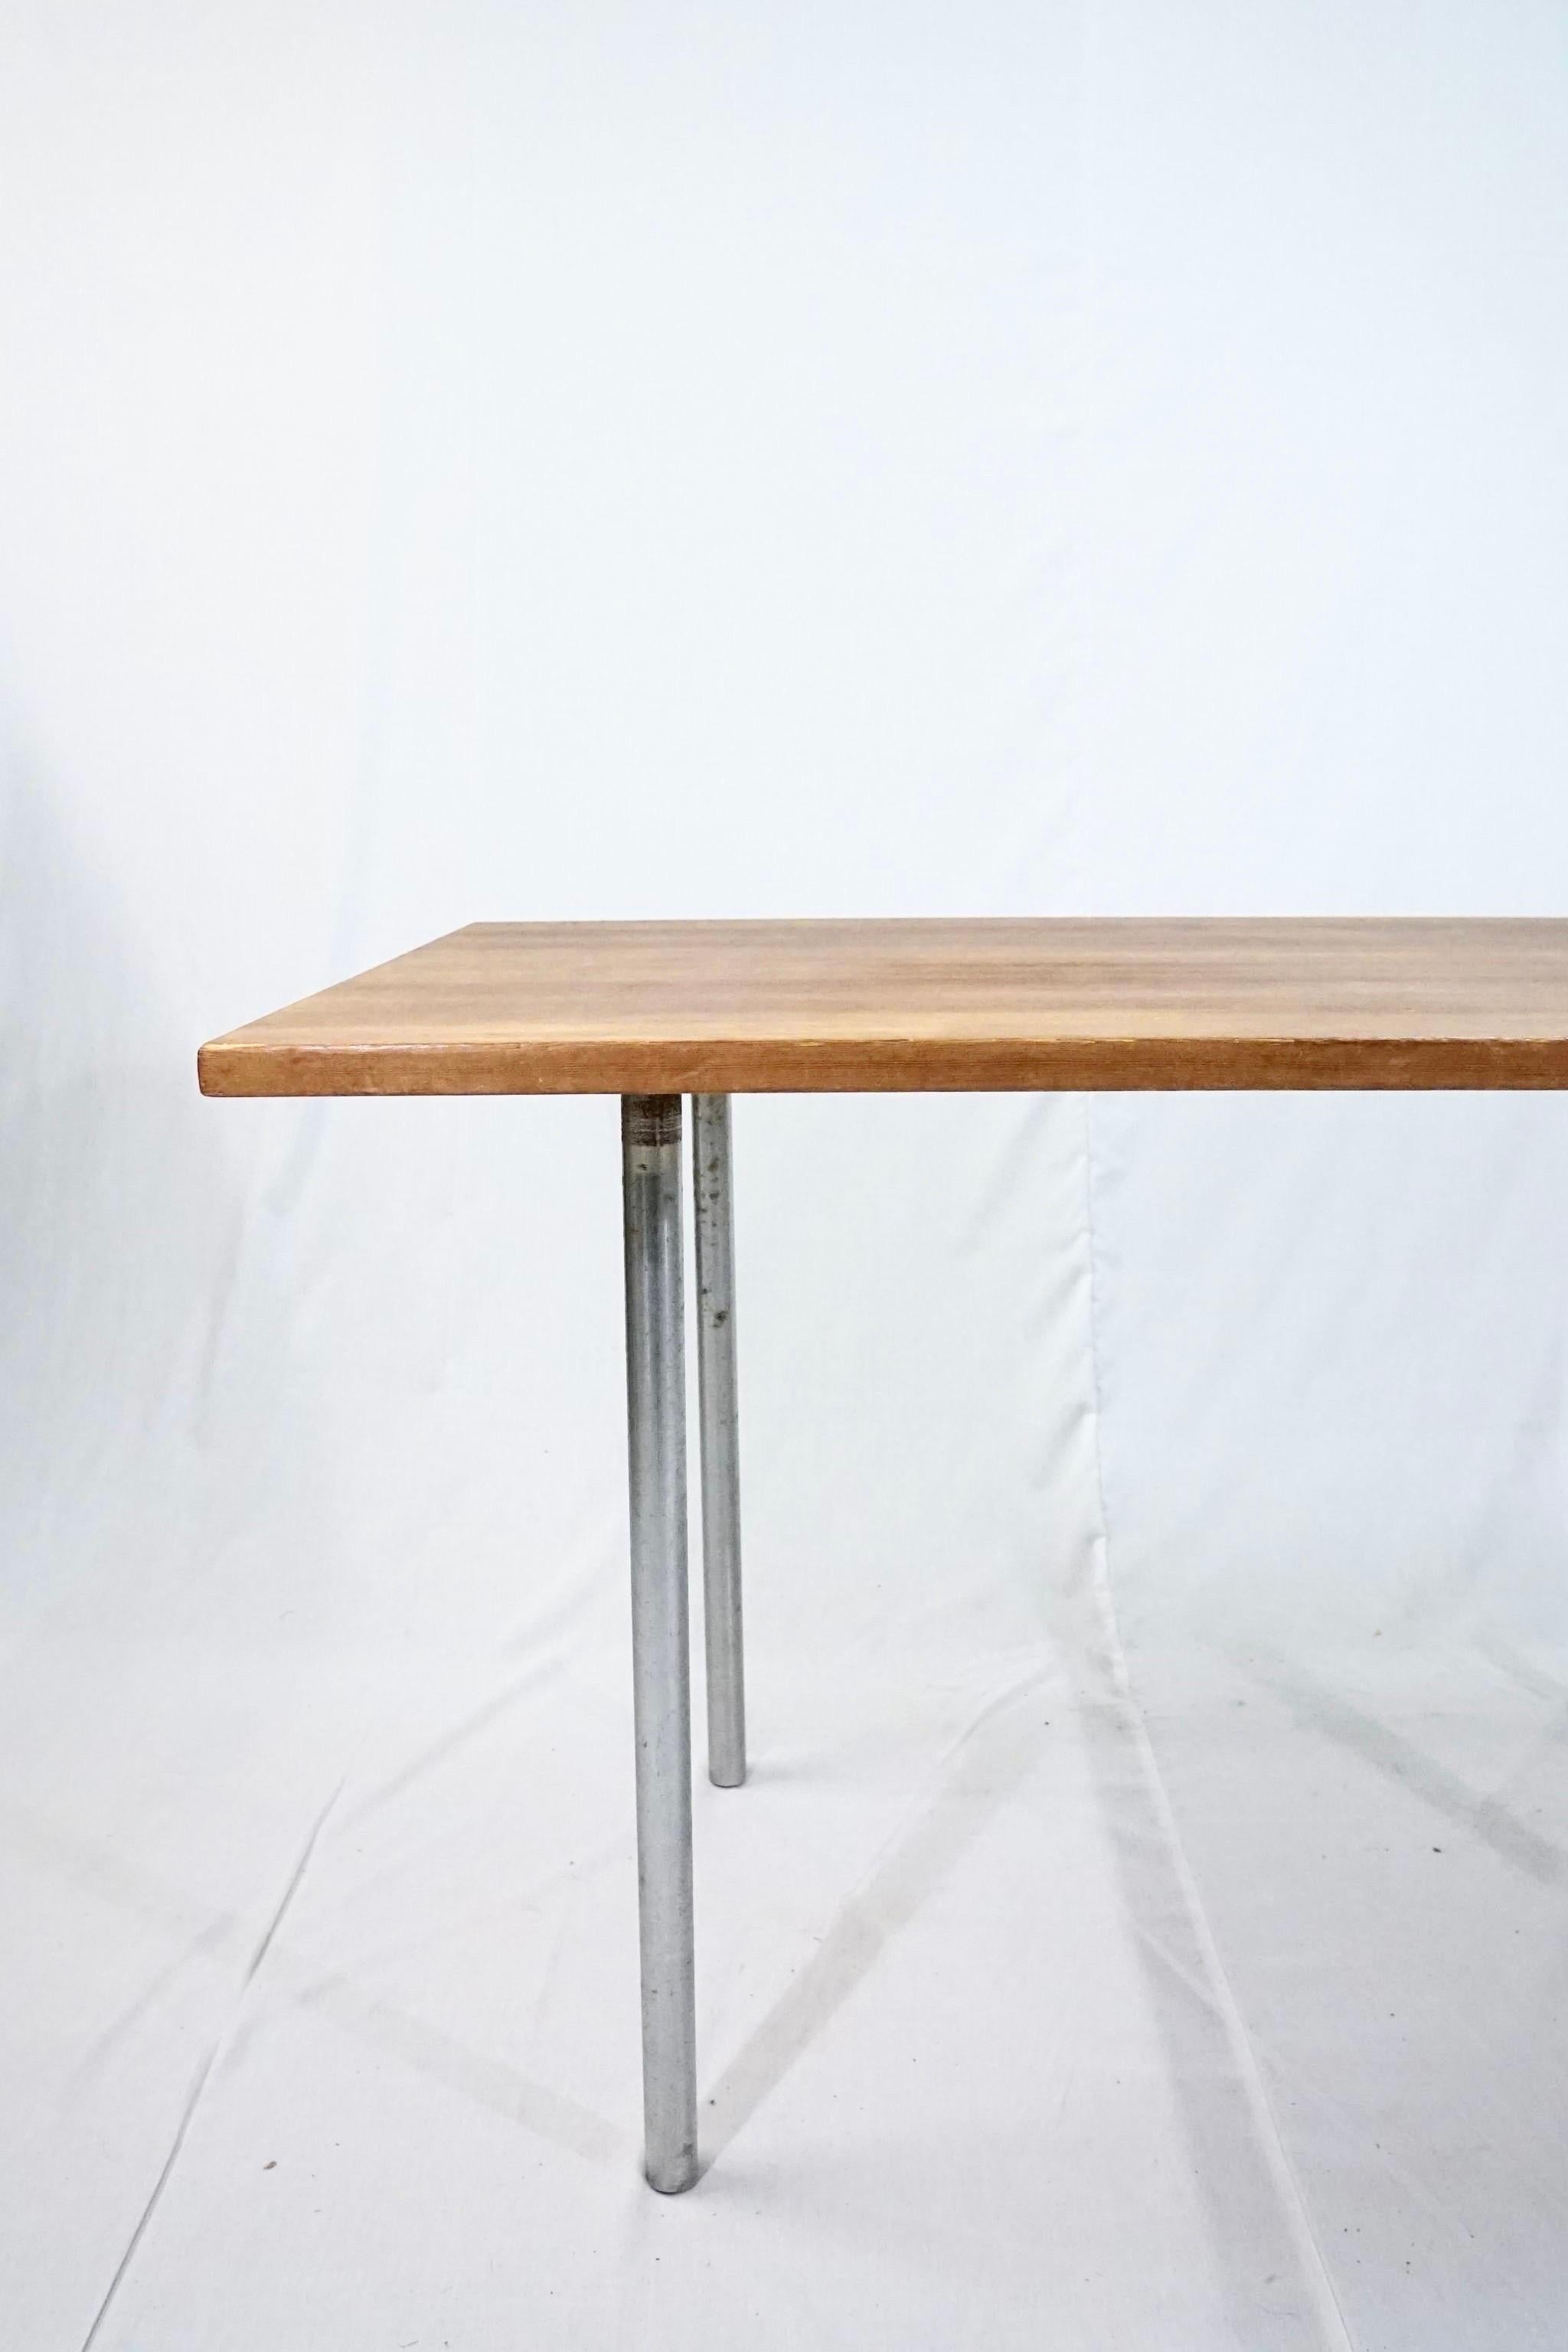 Scandinavian Modern Poul Kjærholm Pk41 Dining Table in Oregon Pine Manufactured by E Kold